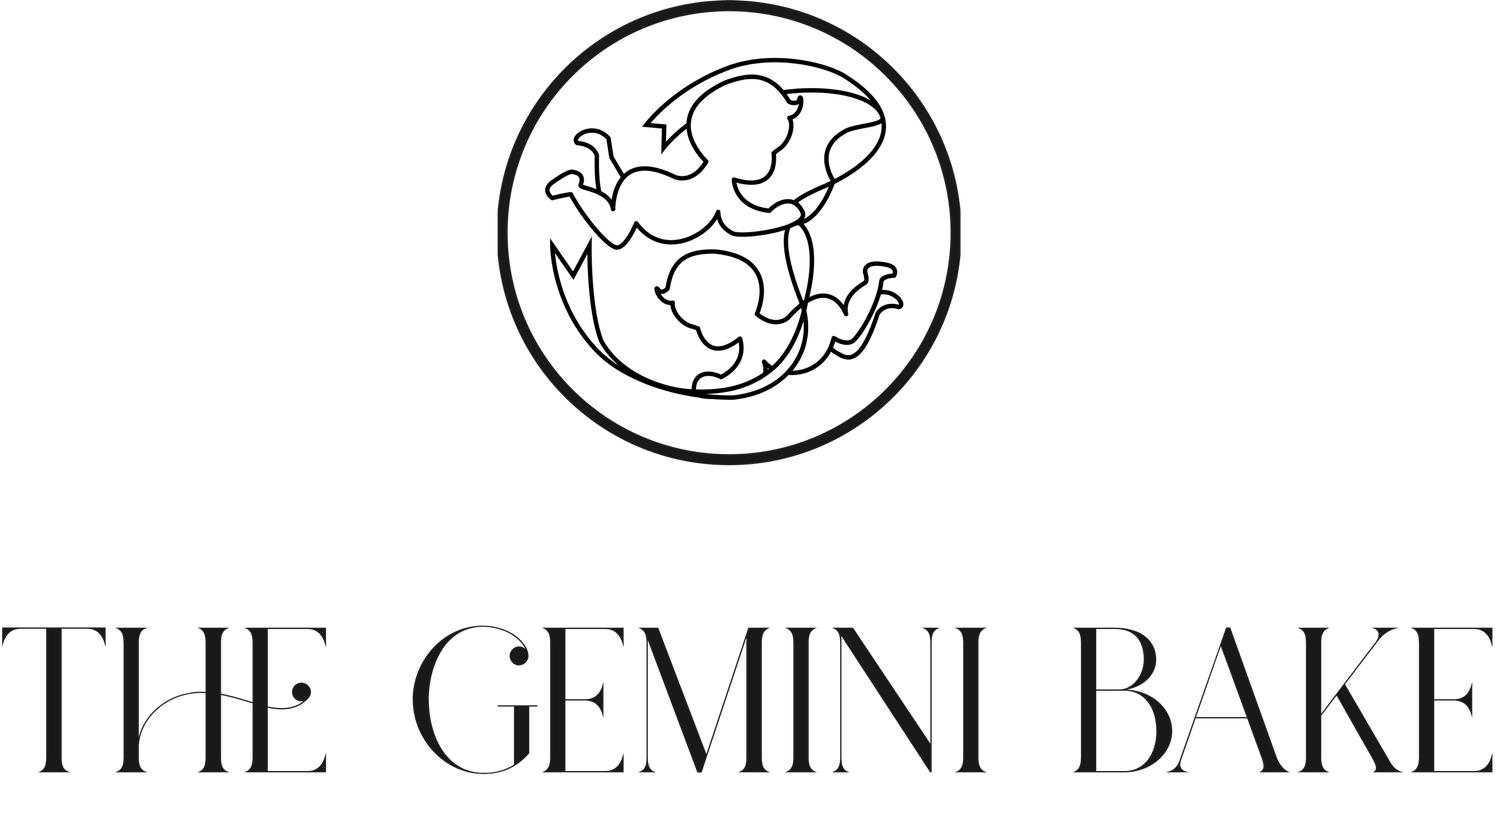 THE GEMINI BAKE